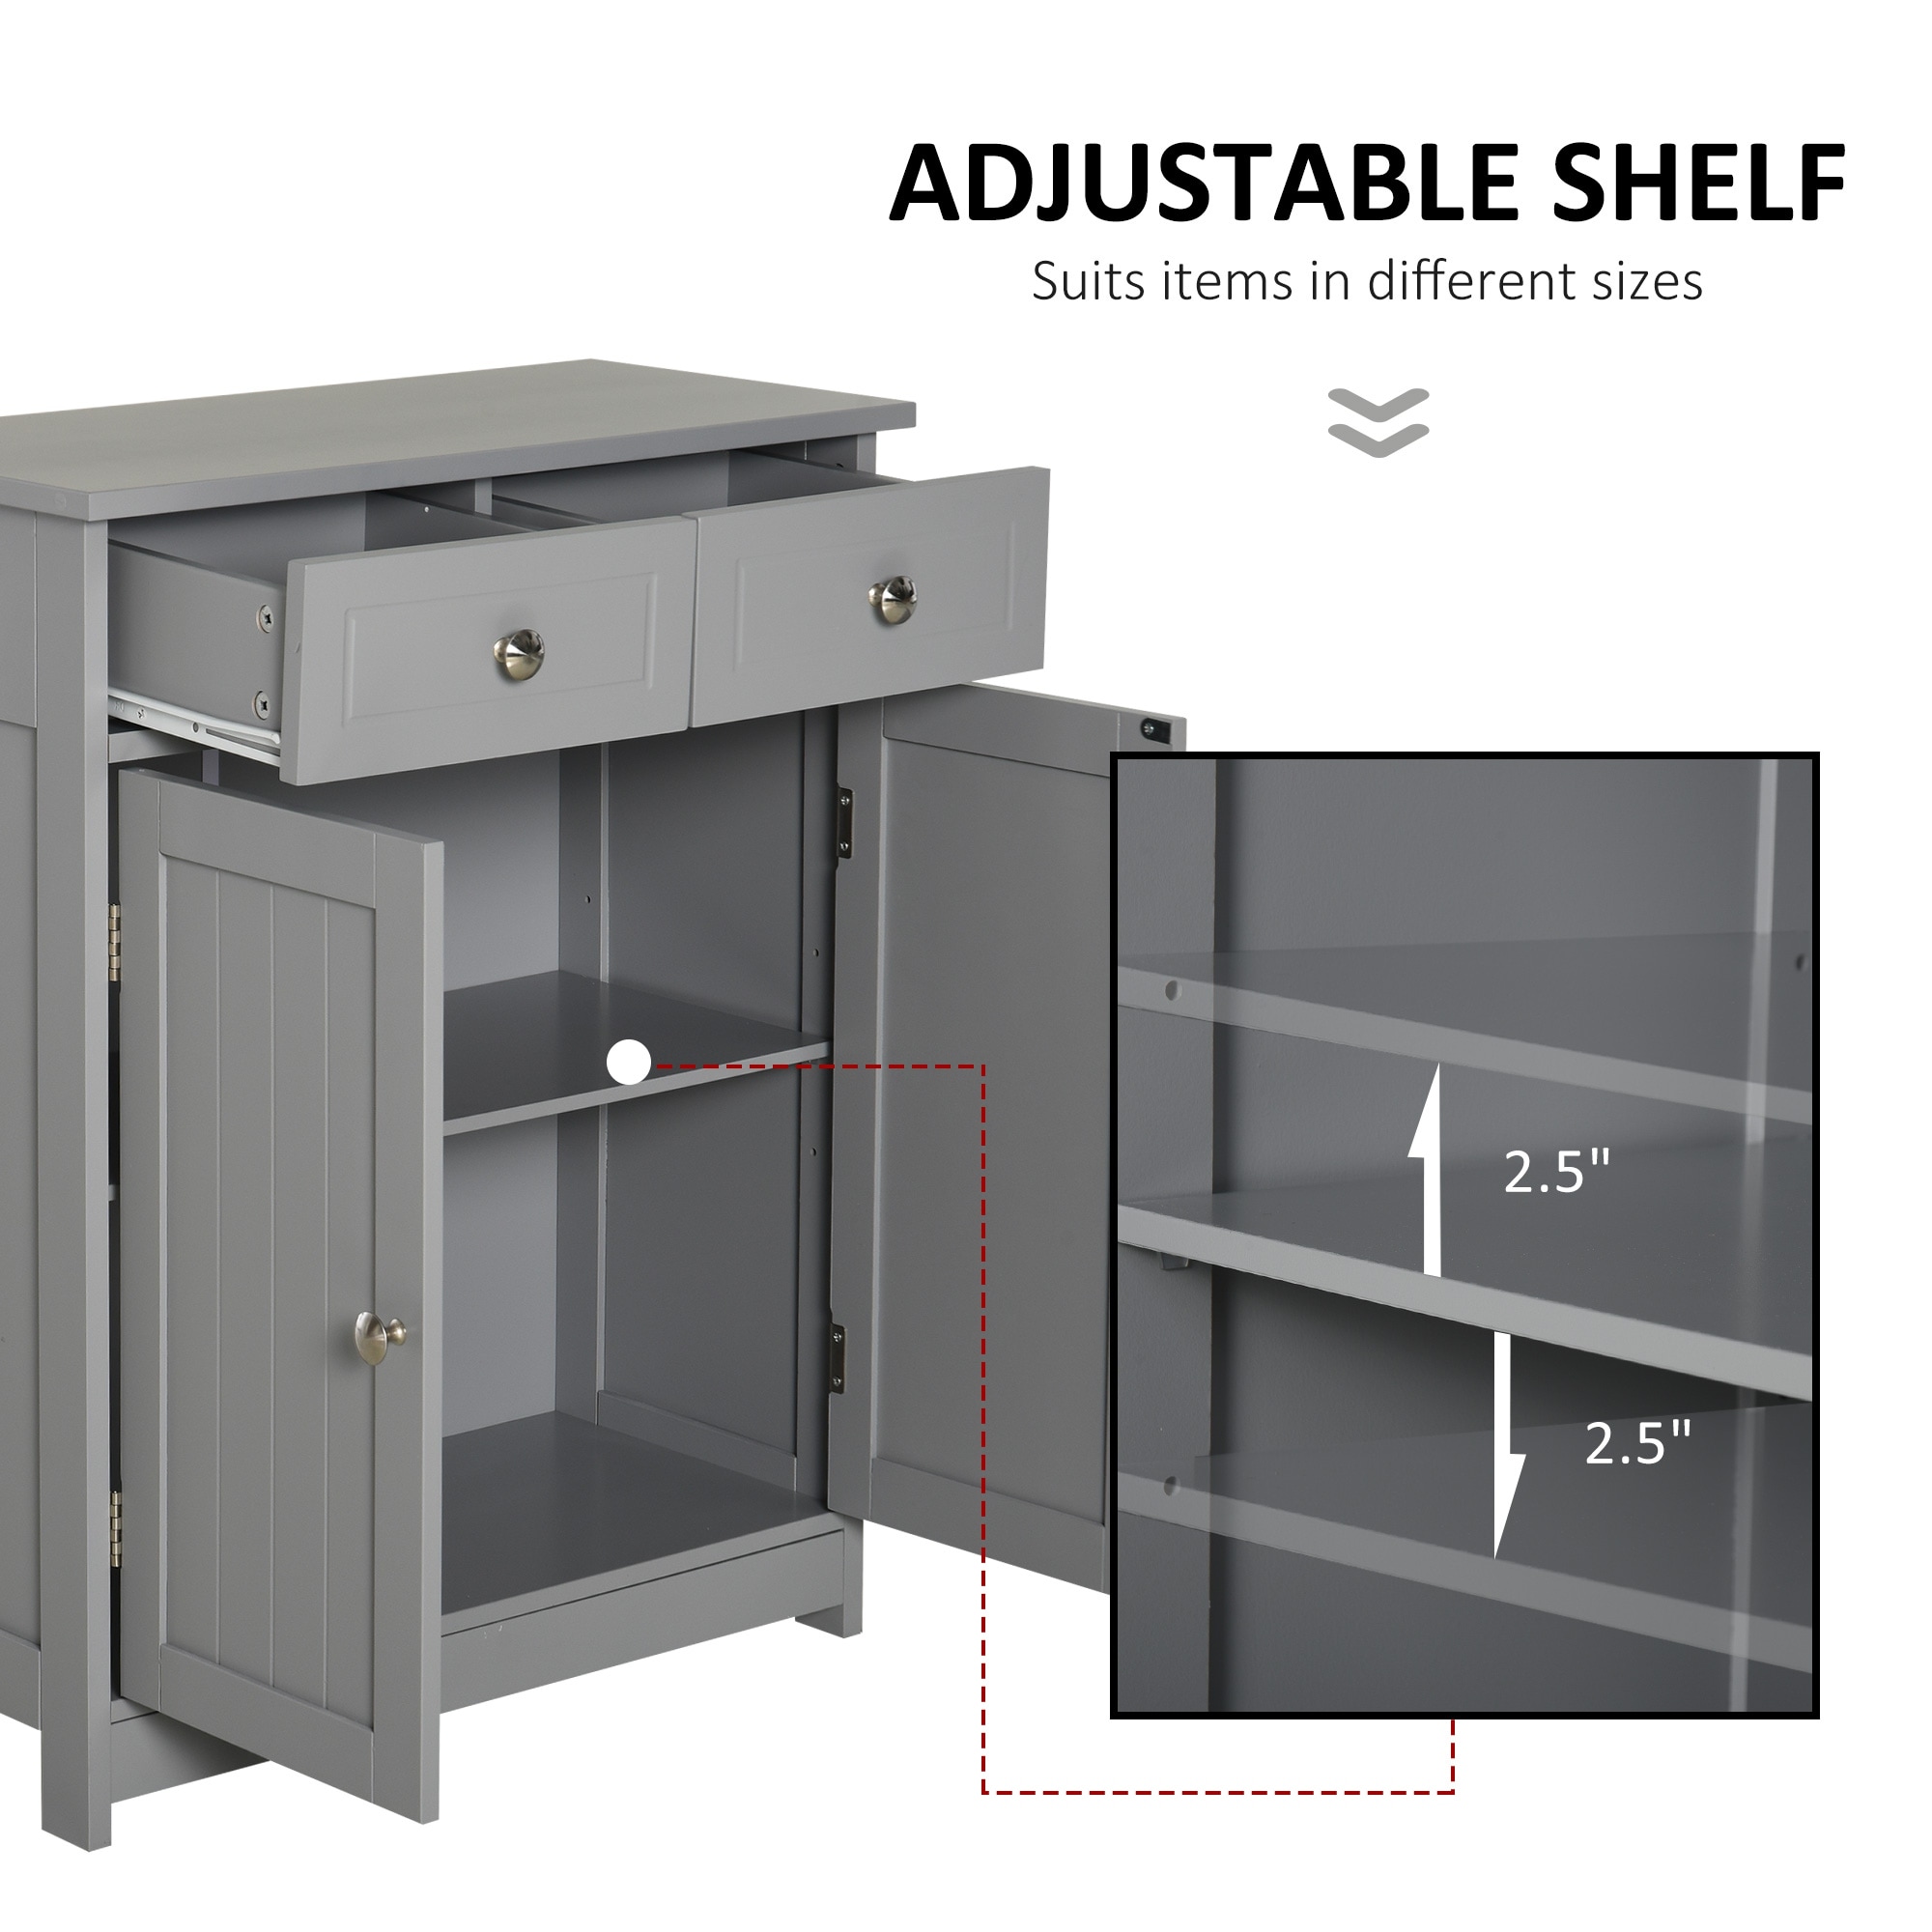 https://ak1.ostkcdn.com/images/products/is/images/direct/c92b74486c1ad313a1071df0d4f32df4f11f73f6/kleankin-Freestanding-Bathroom-Storage-Cabinet-Organizer-Floor-Tower-with-2-Door%2C-2-Drawers%2C-Adjustable-Shelf%2C-Grey.jpg